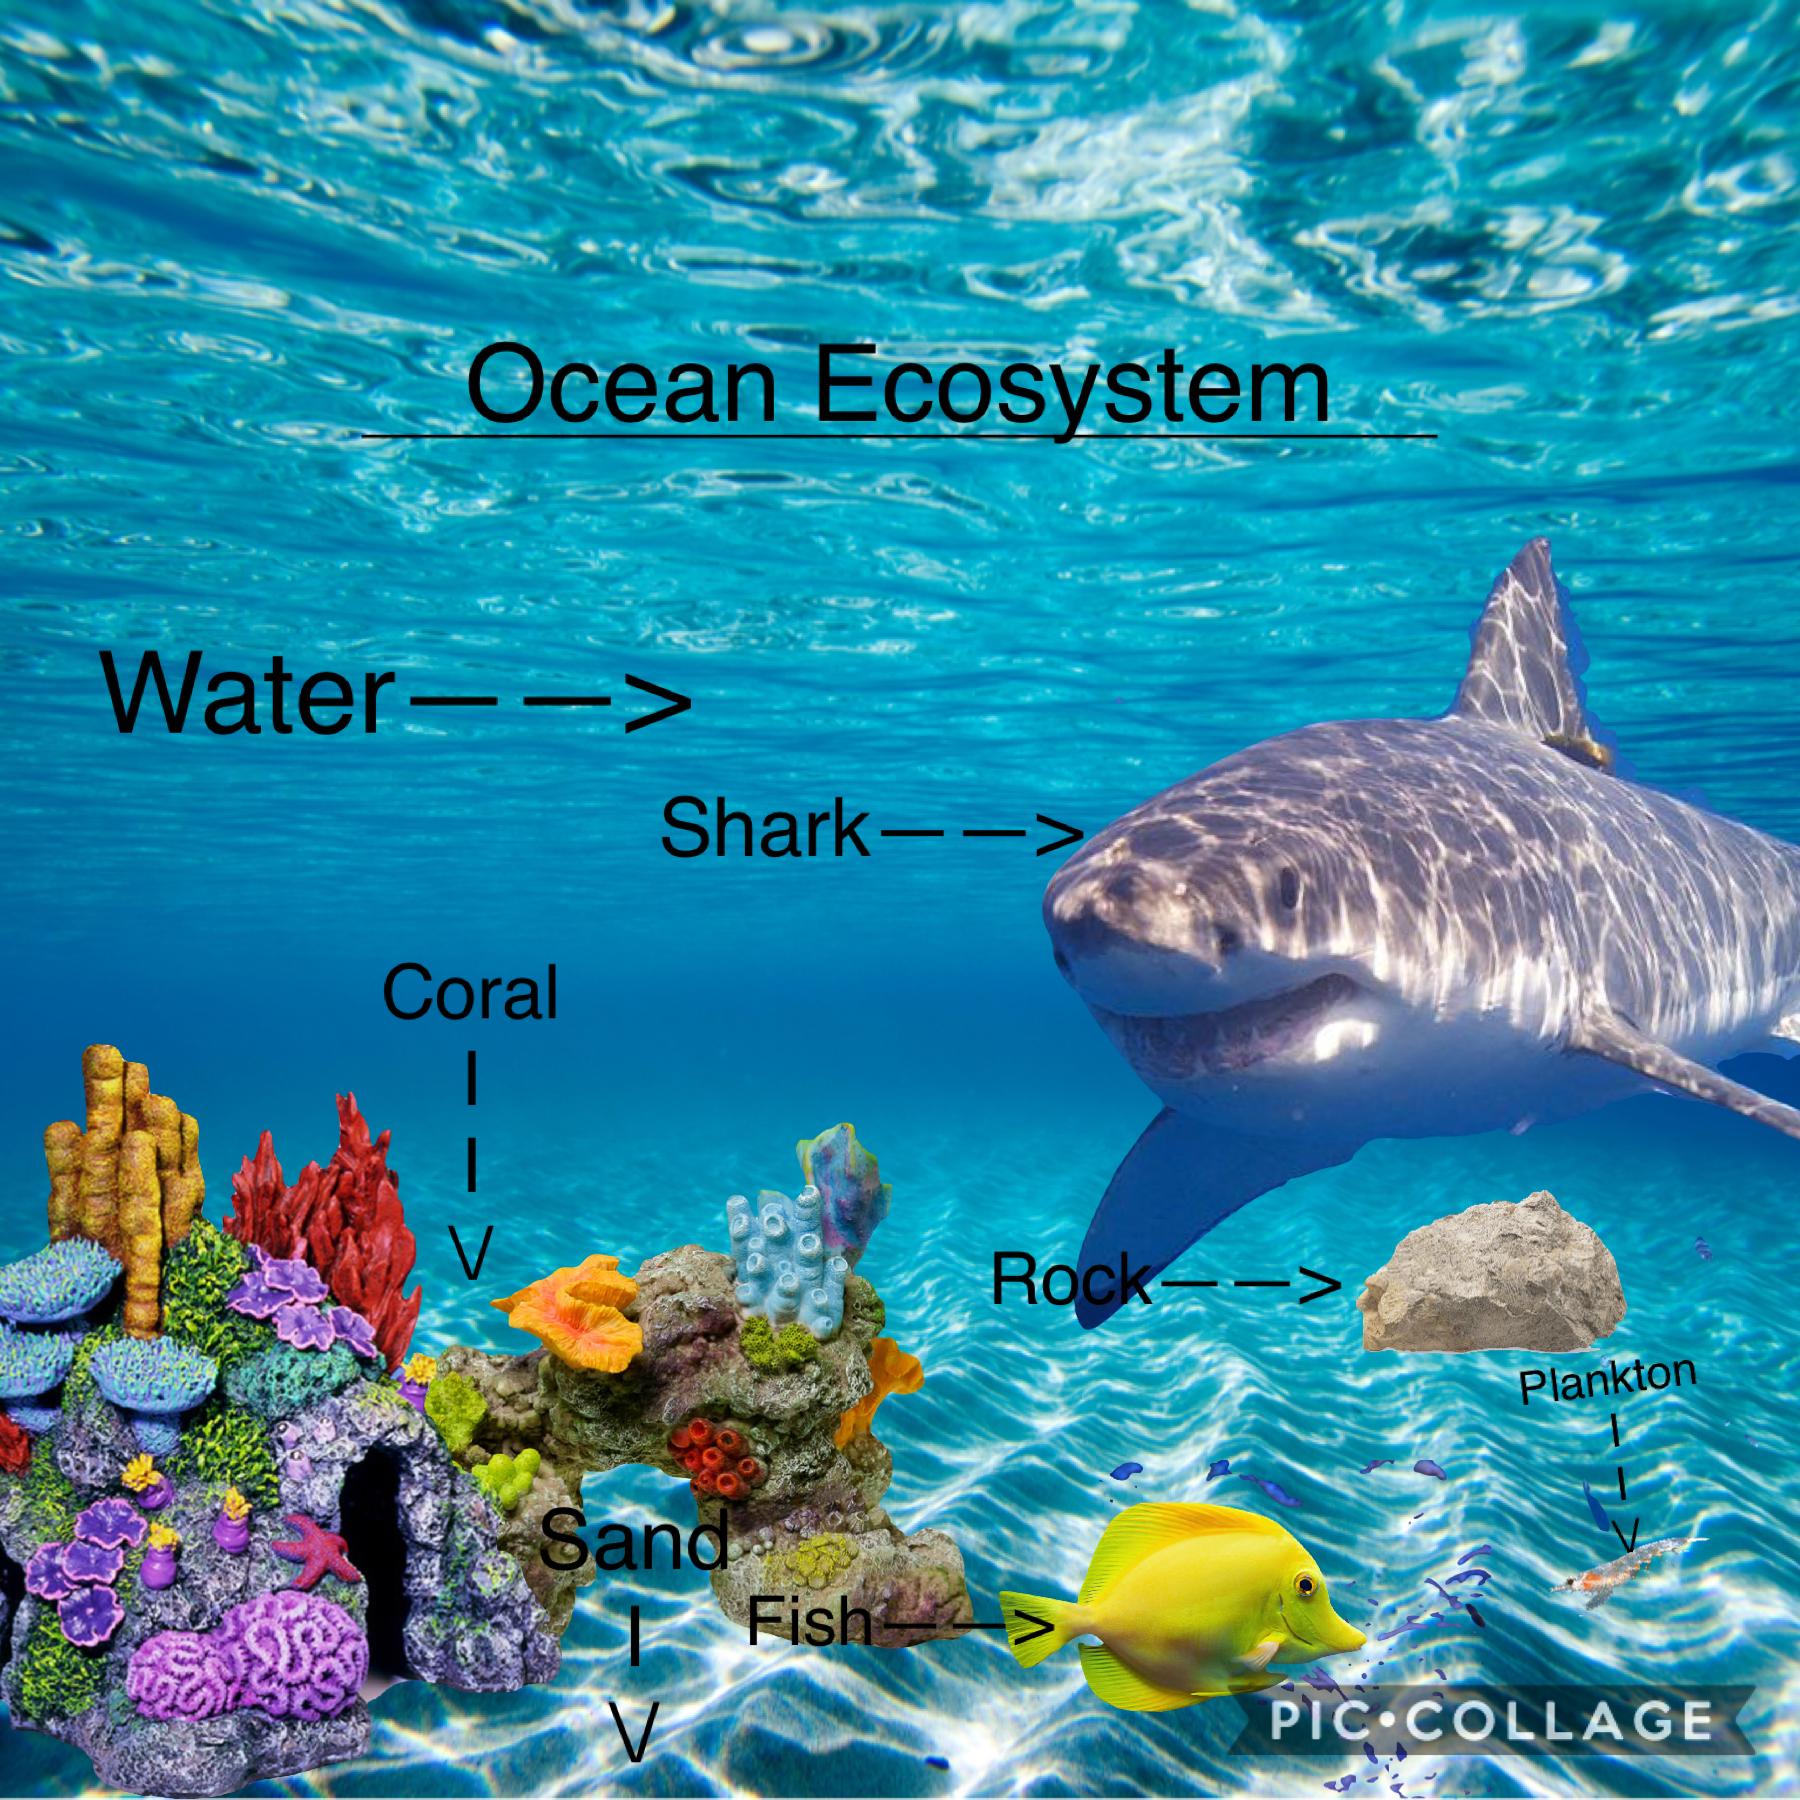 Ocean ecosystem
Science